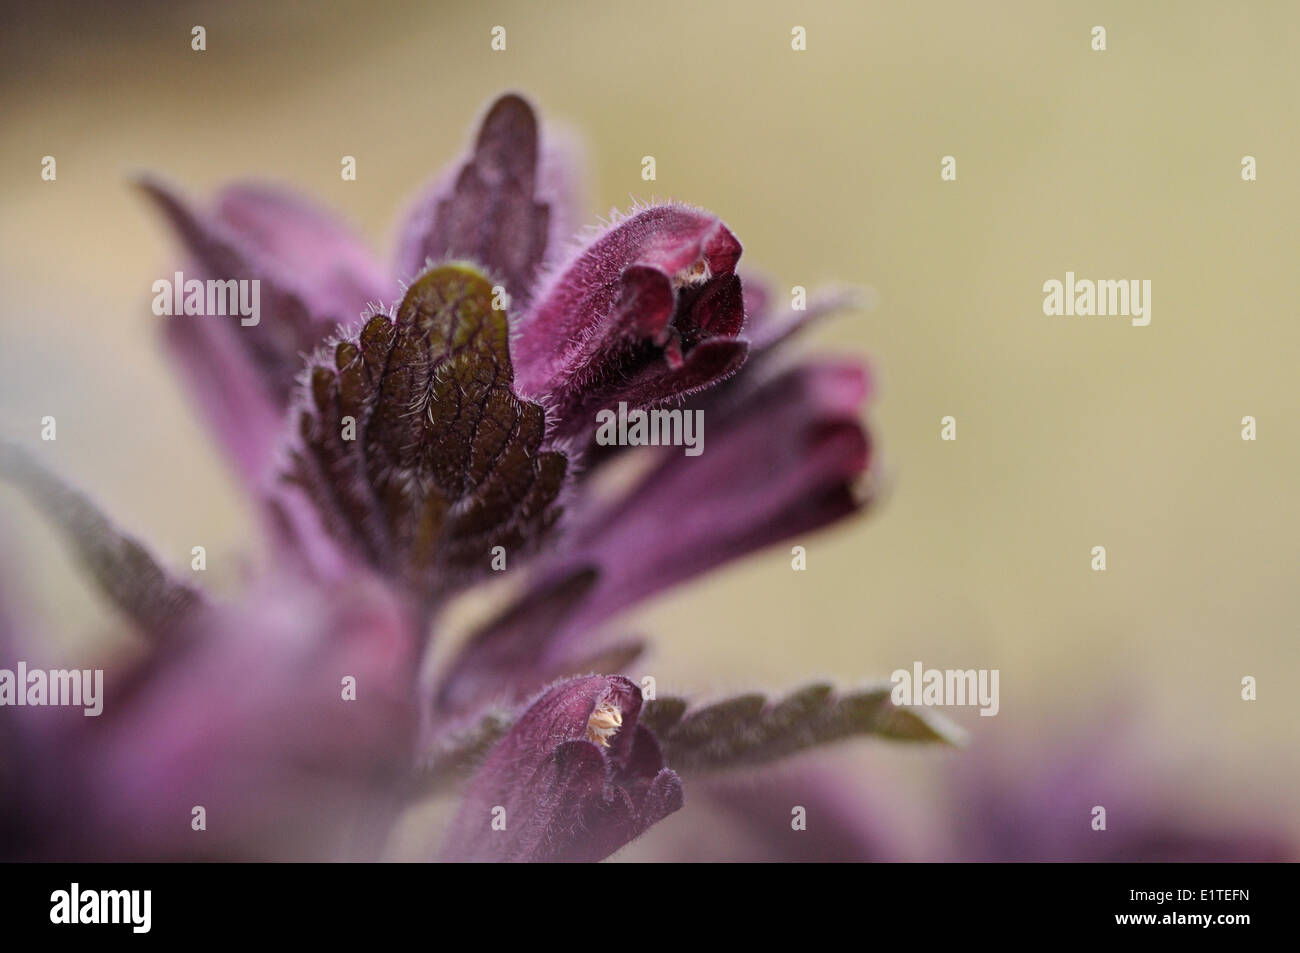 Flowering Alpine Bartsia Stock Photo